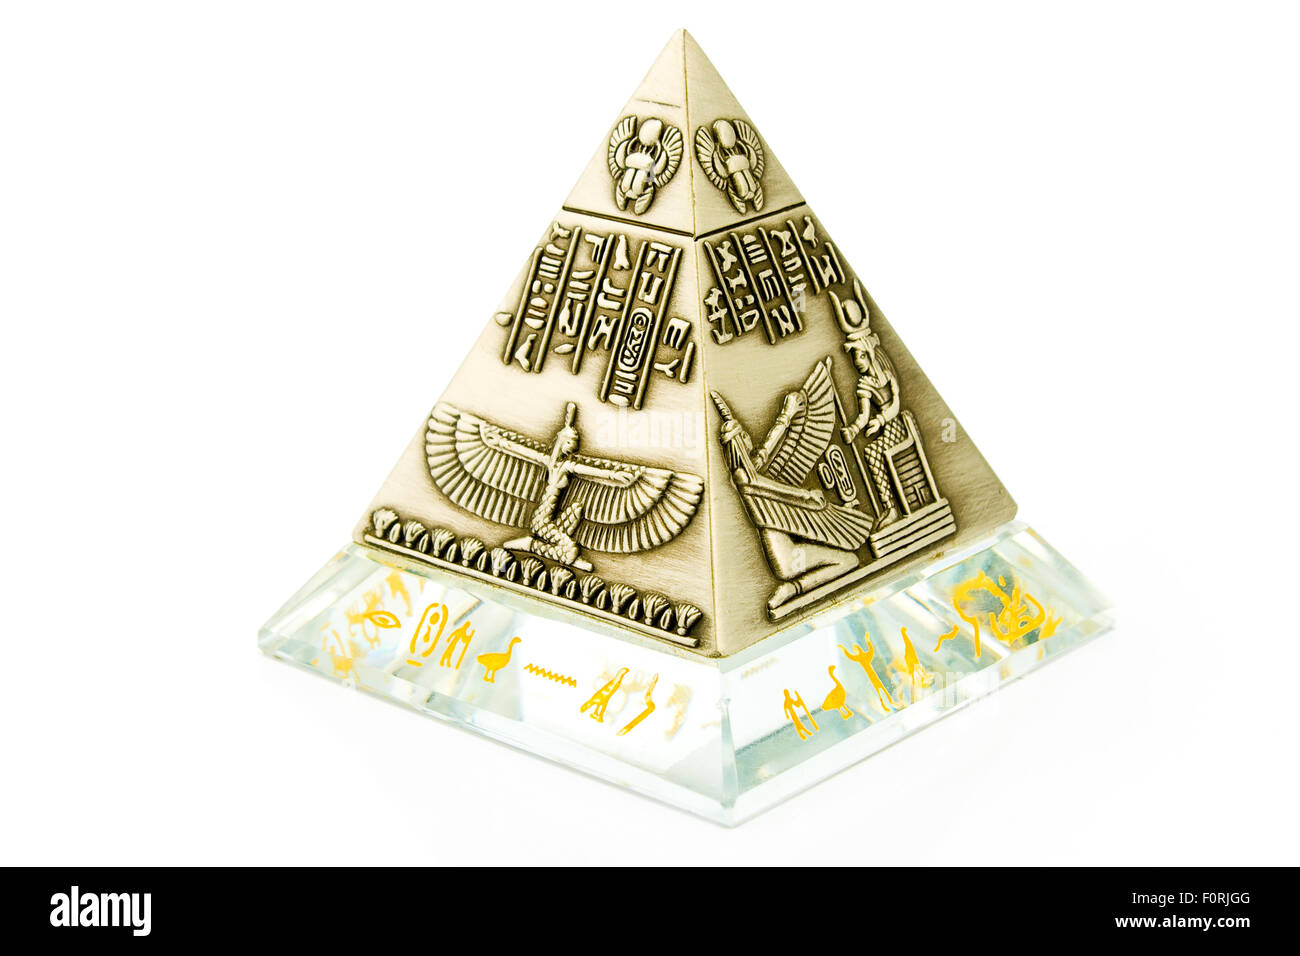 Messing-Pyramide-Souvenir isoliert auf weiss Stockfoto